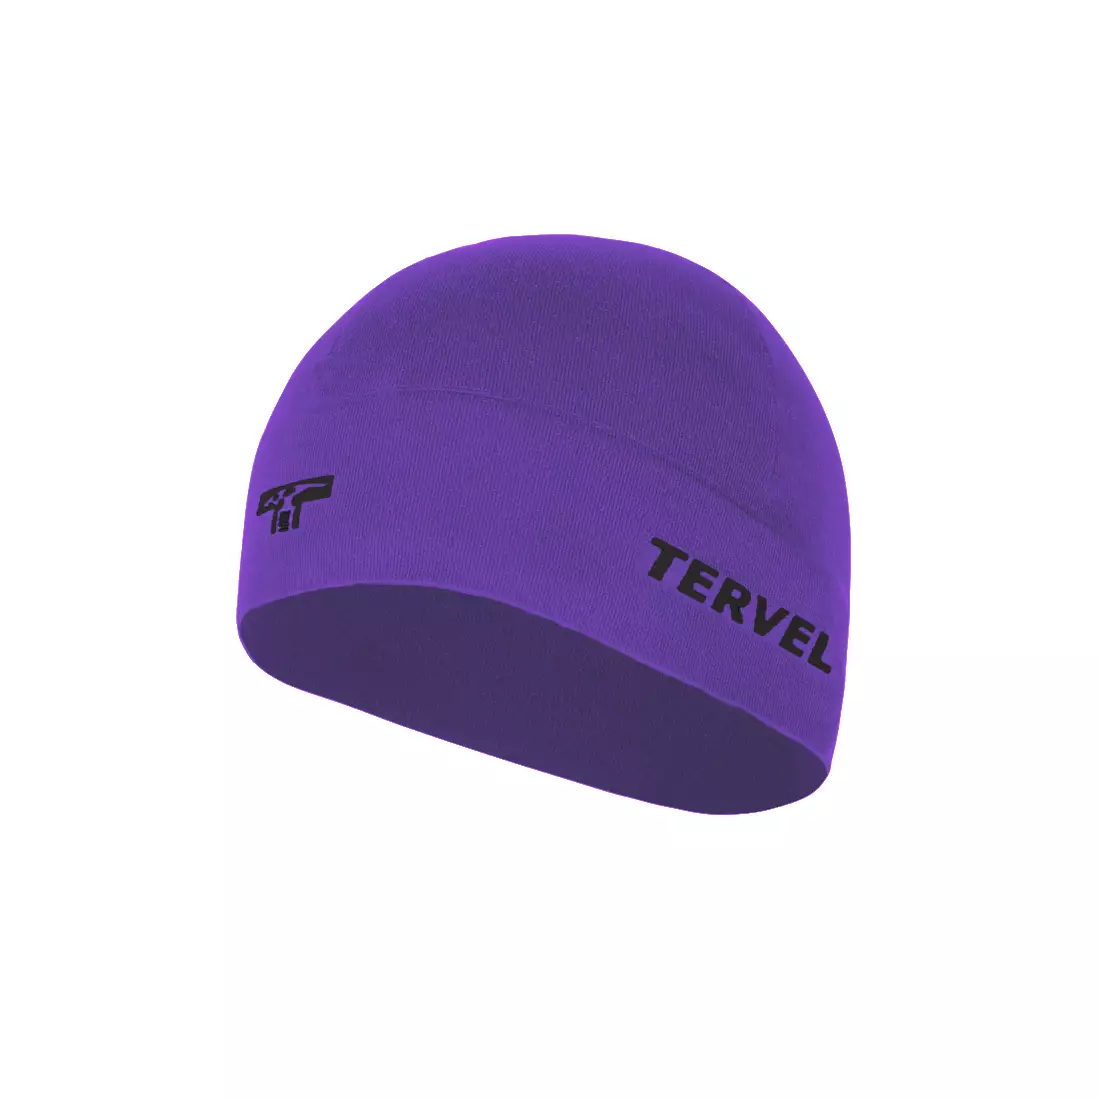 TERVEL 7001 - COMFORTLINE - training cap, color: Purple, size: Universal